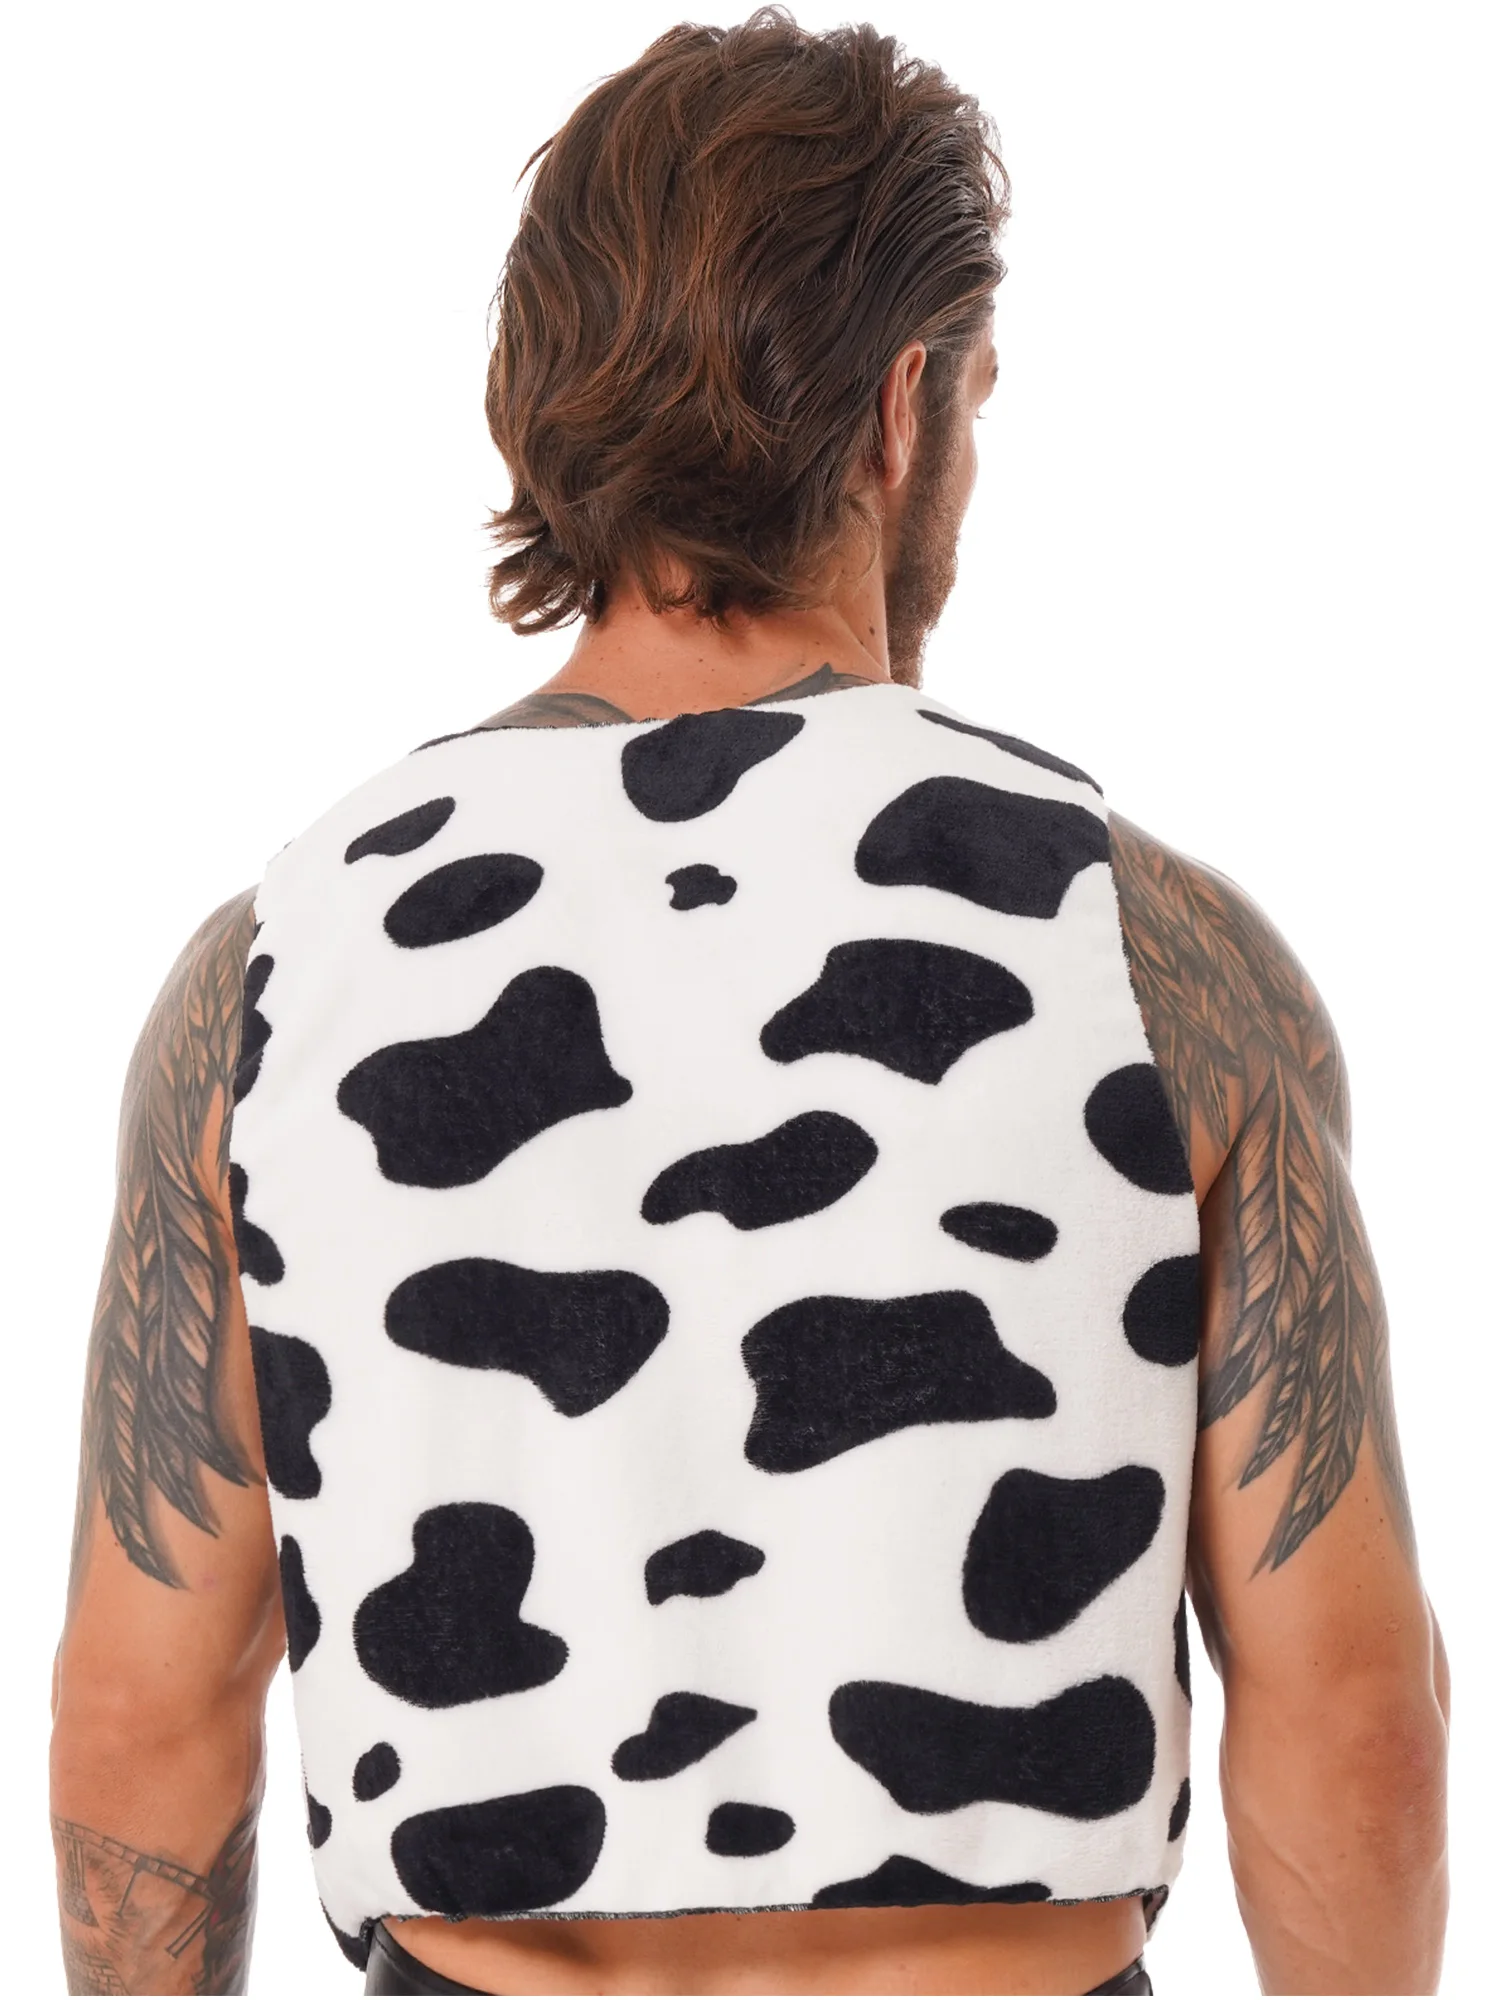 iEFiEL Mens Cow Print Vest Adult Festival Hippie Costume Halloween Vests Open Front Short Coats 